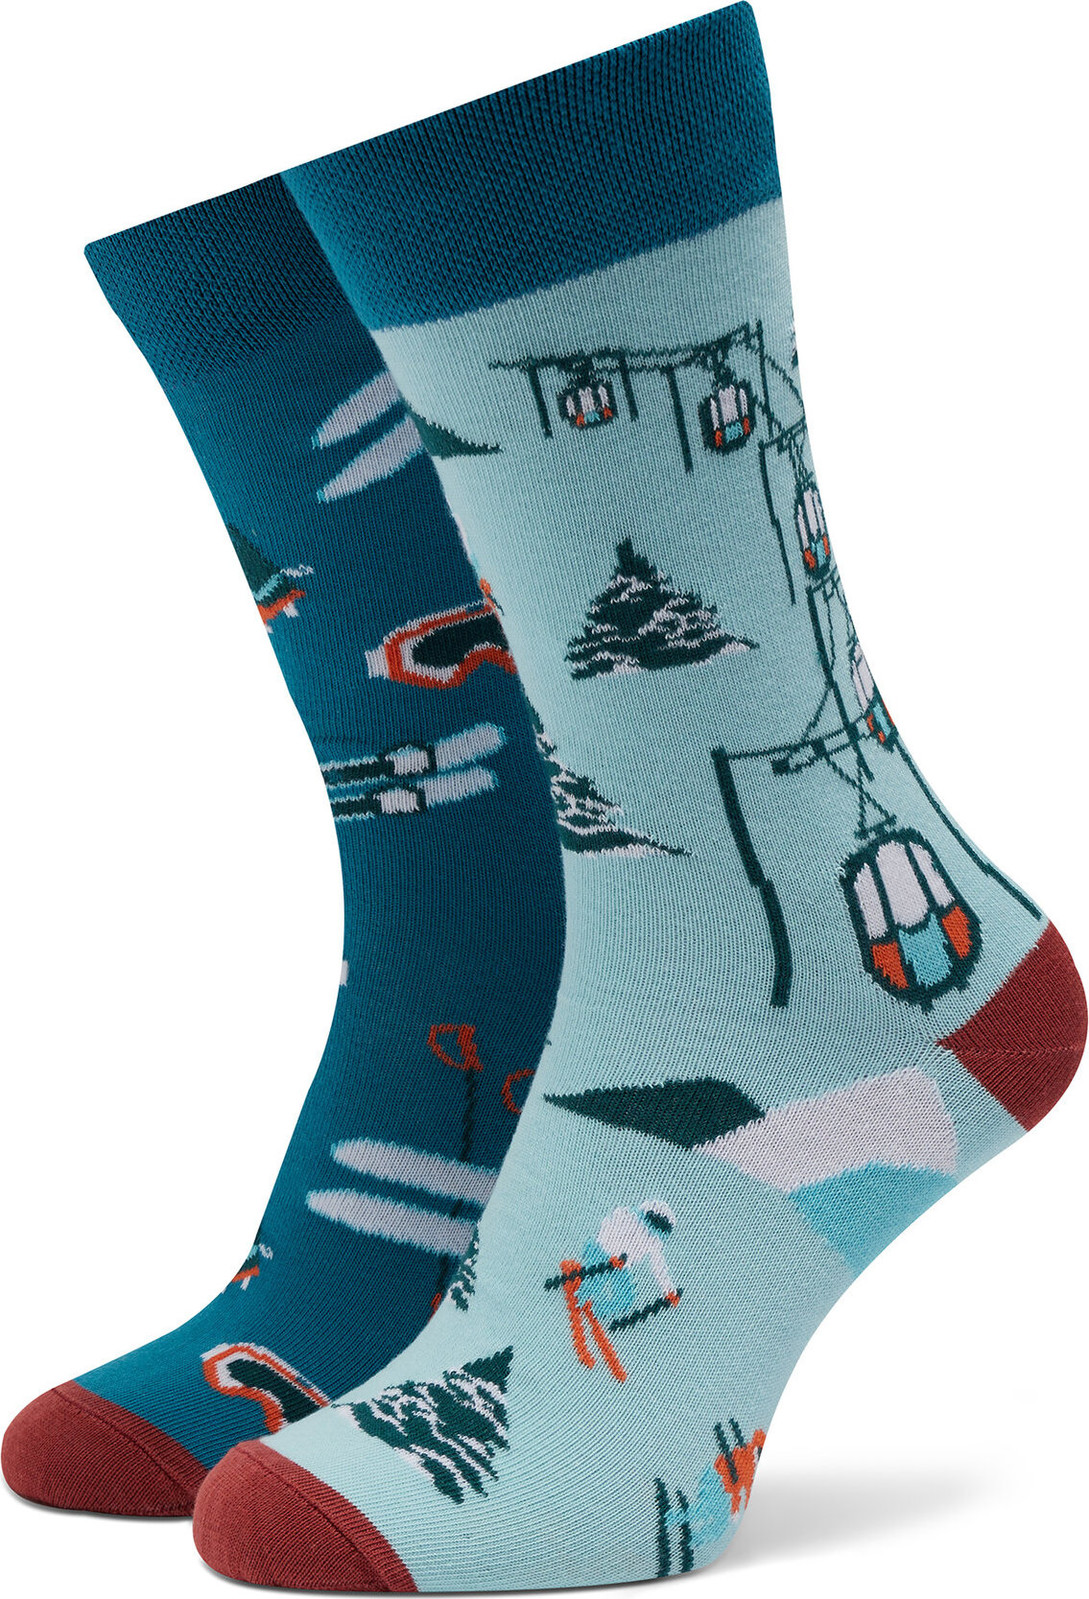 Klasické ponožky Unisex Funny Socks Ski SM1/06 Modrá